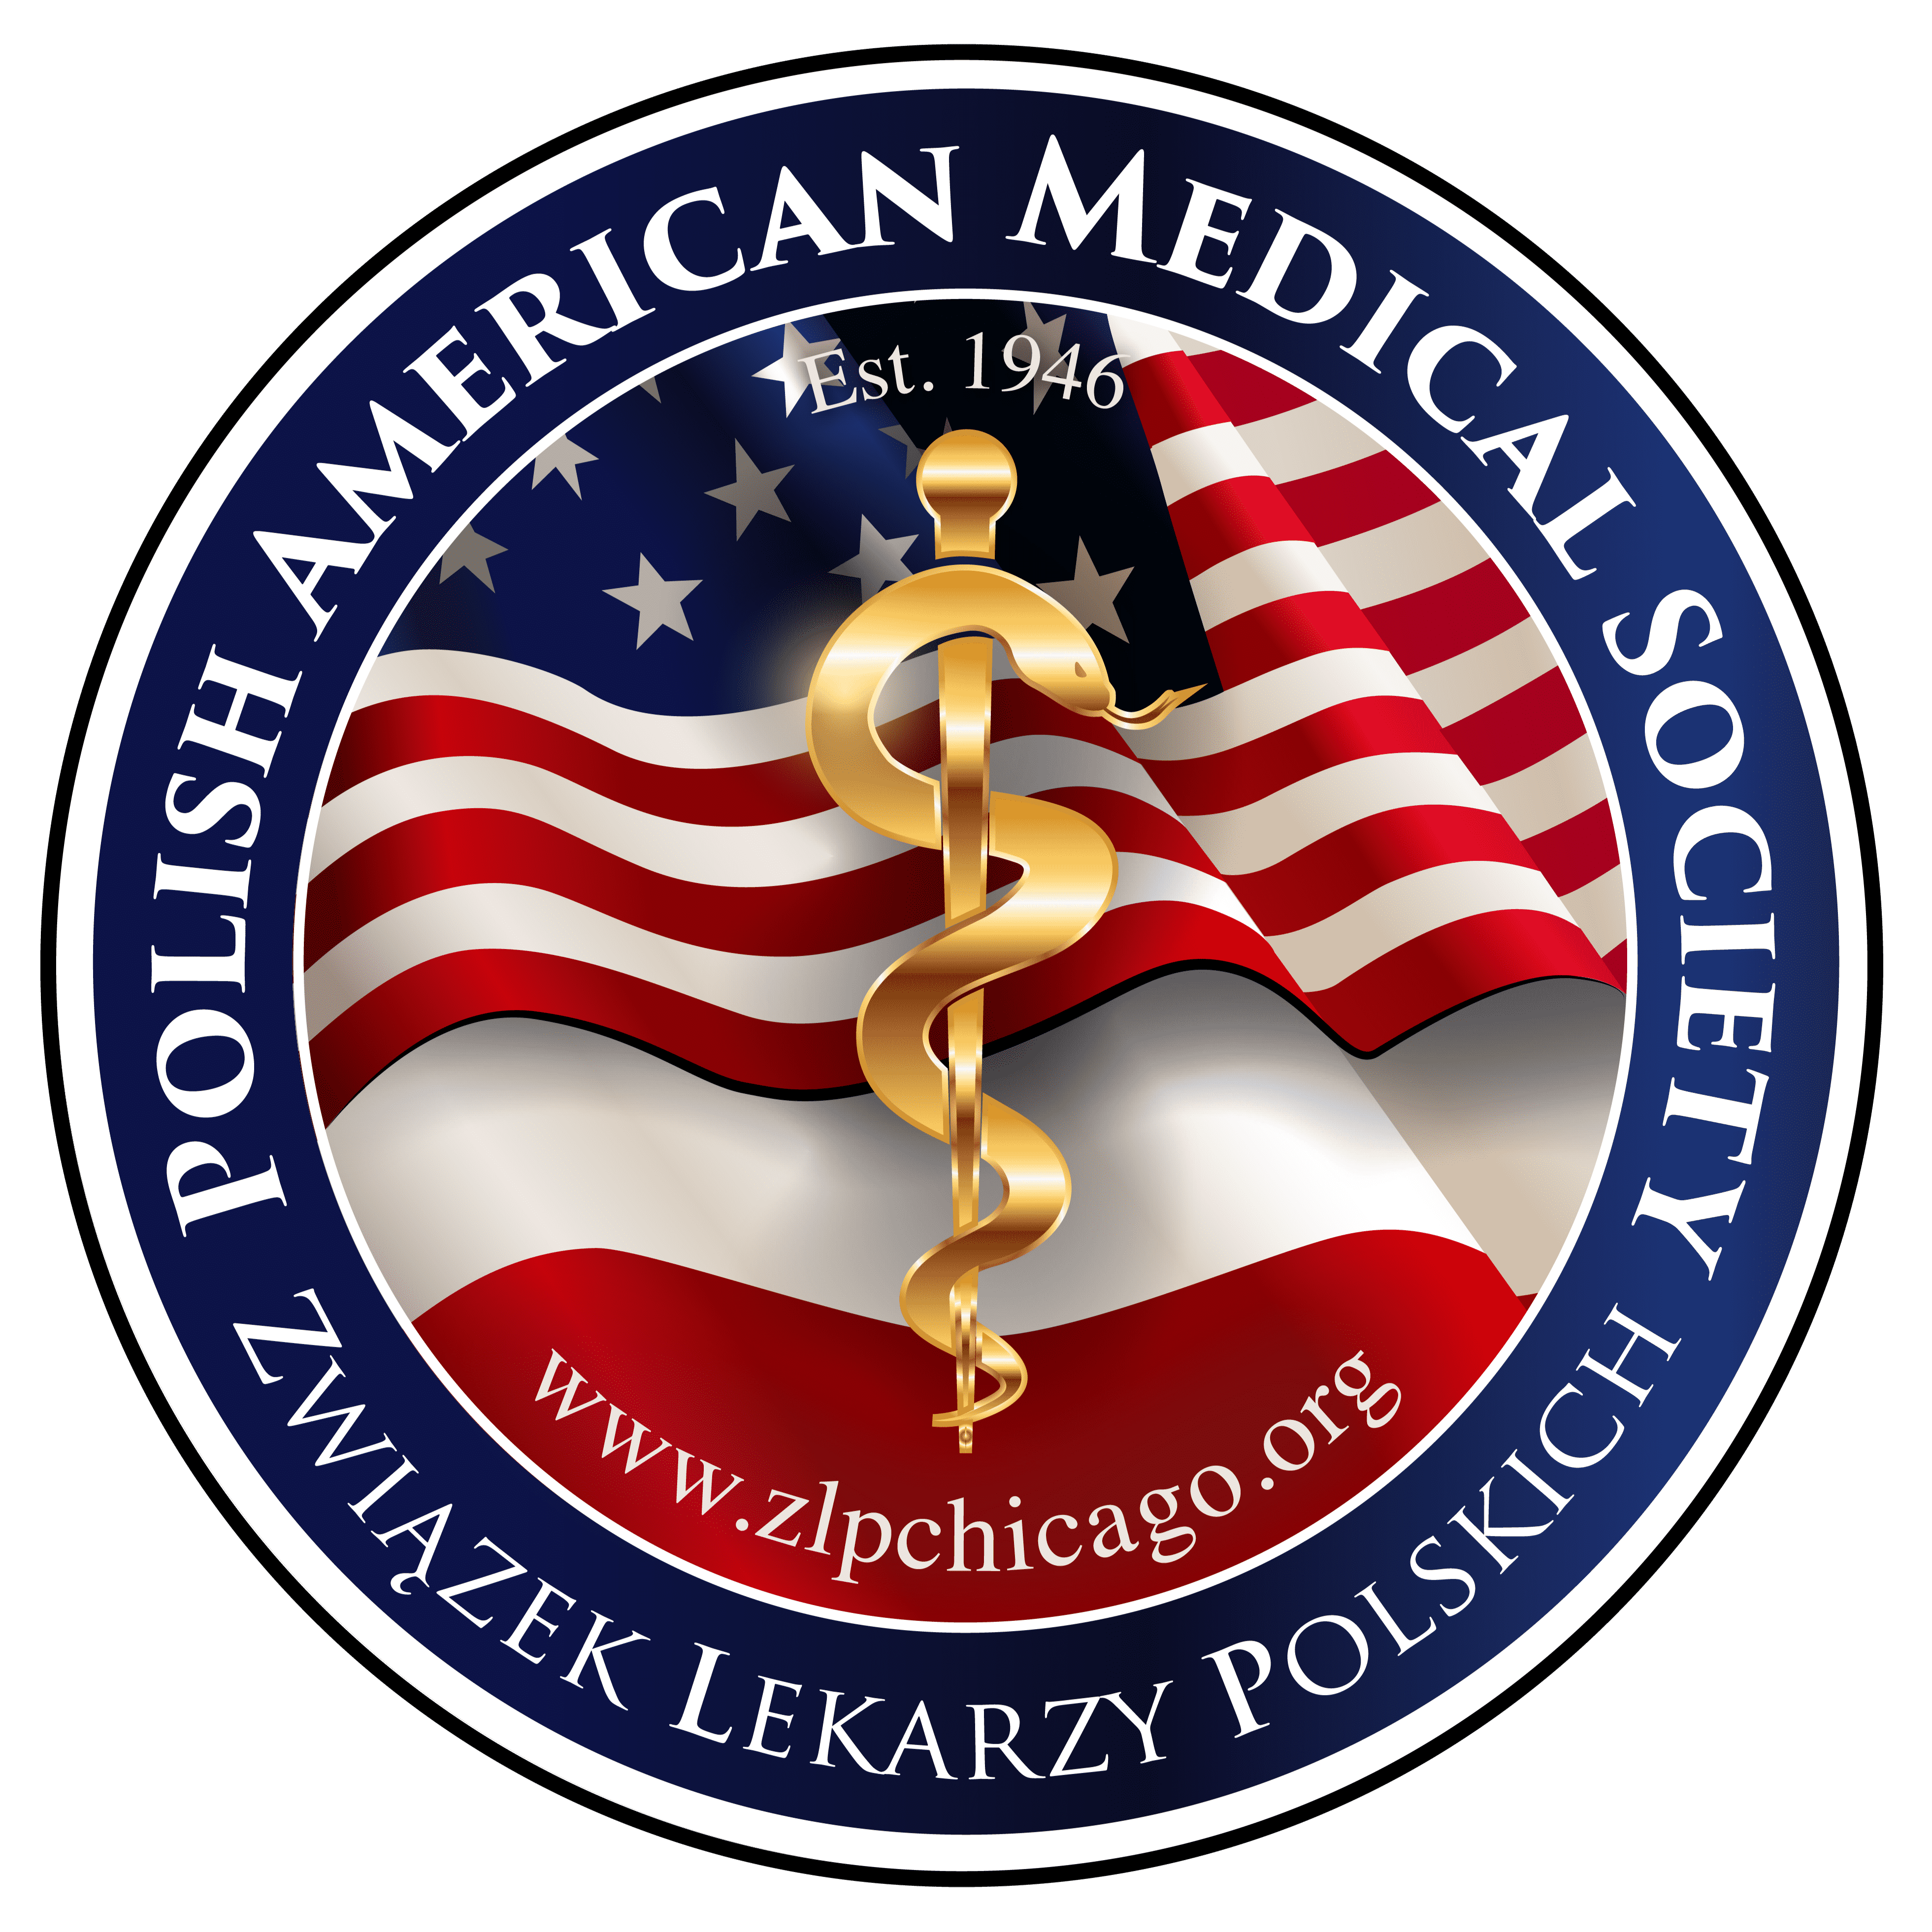 Polish Non Profit Organizations in USA - Polish American Medical Society in Chicago